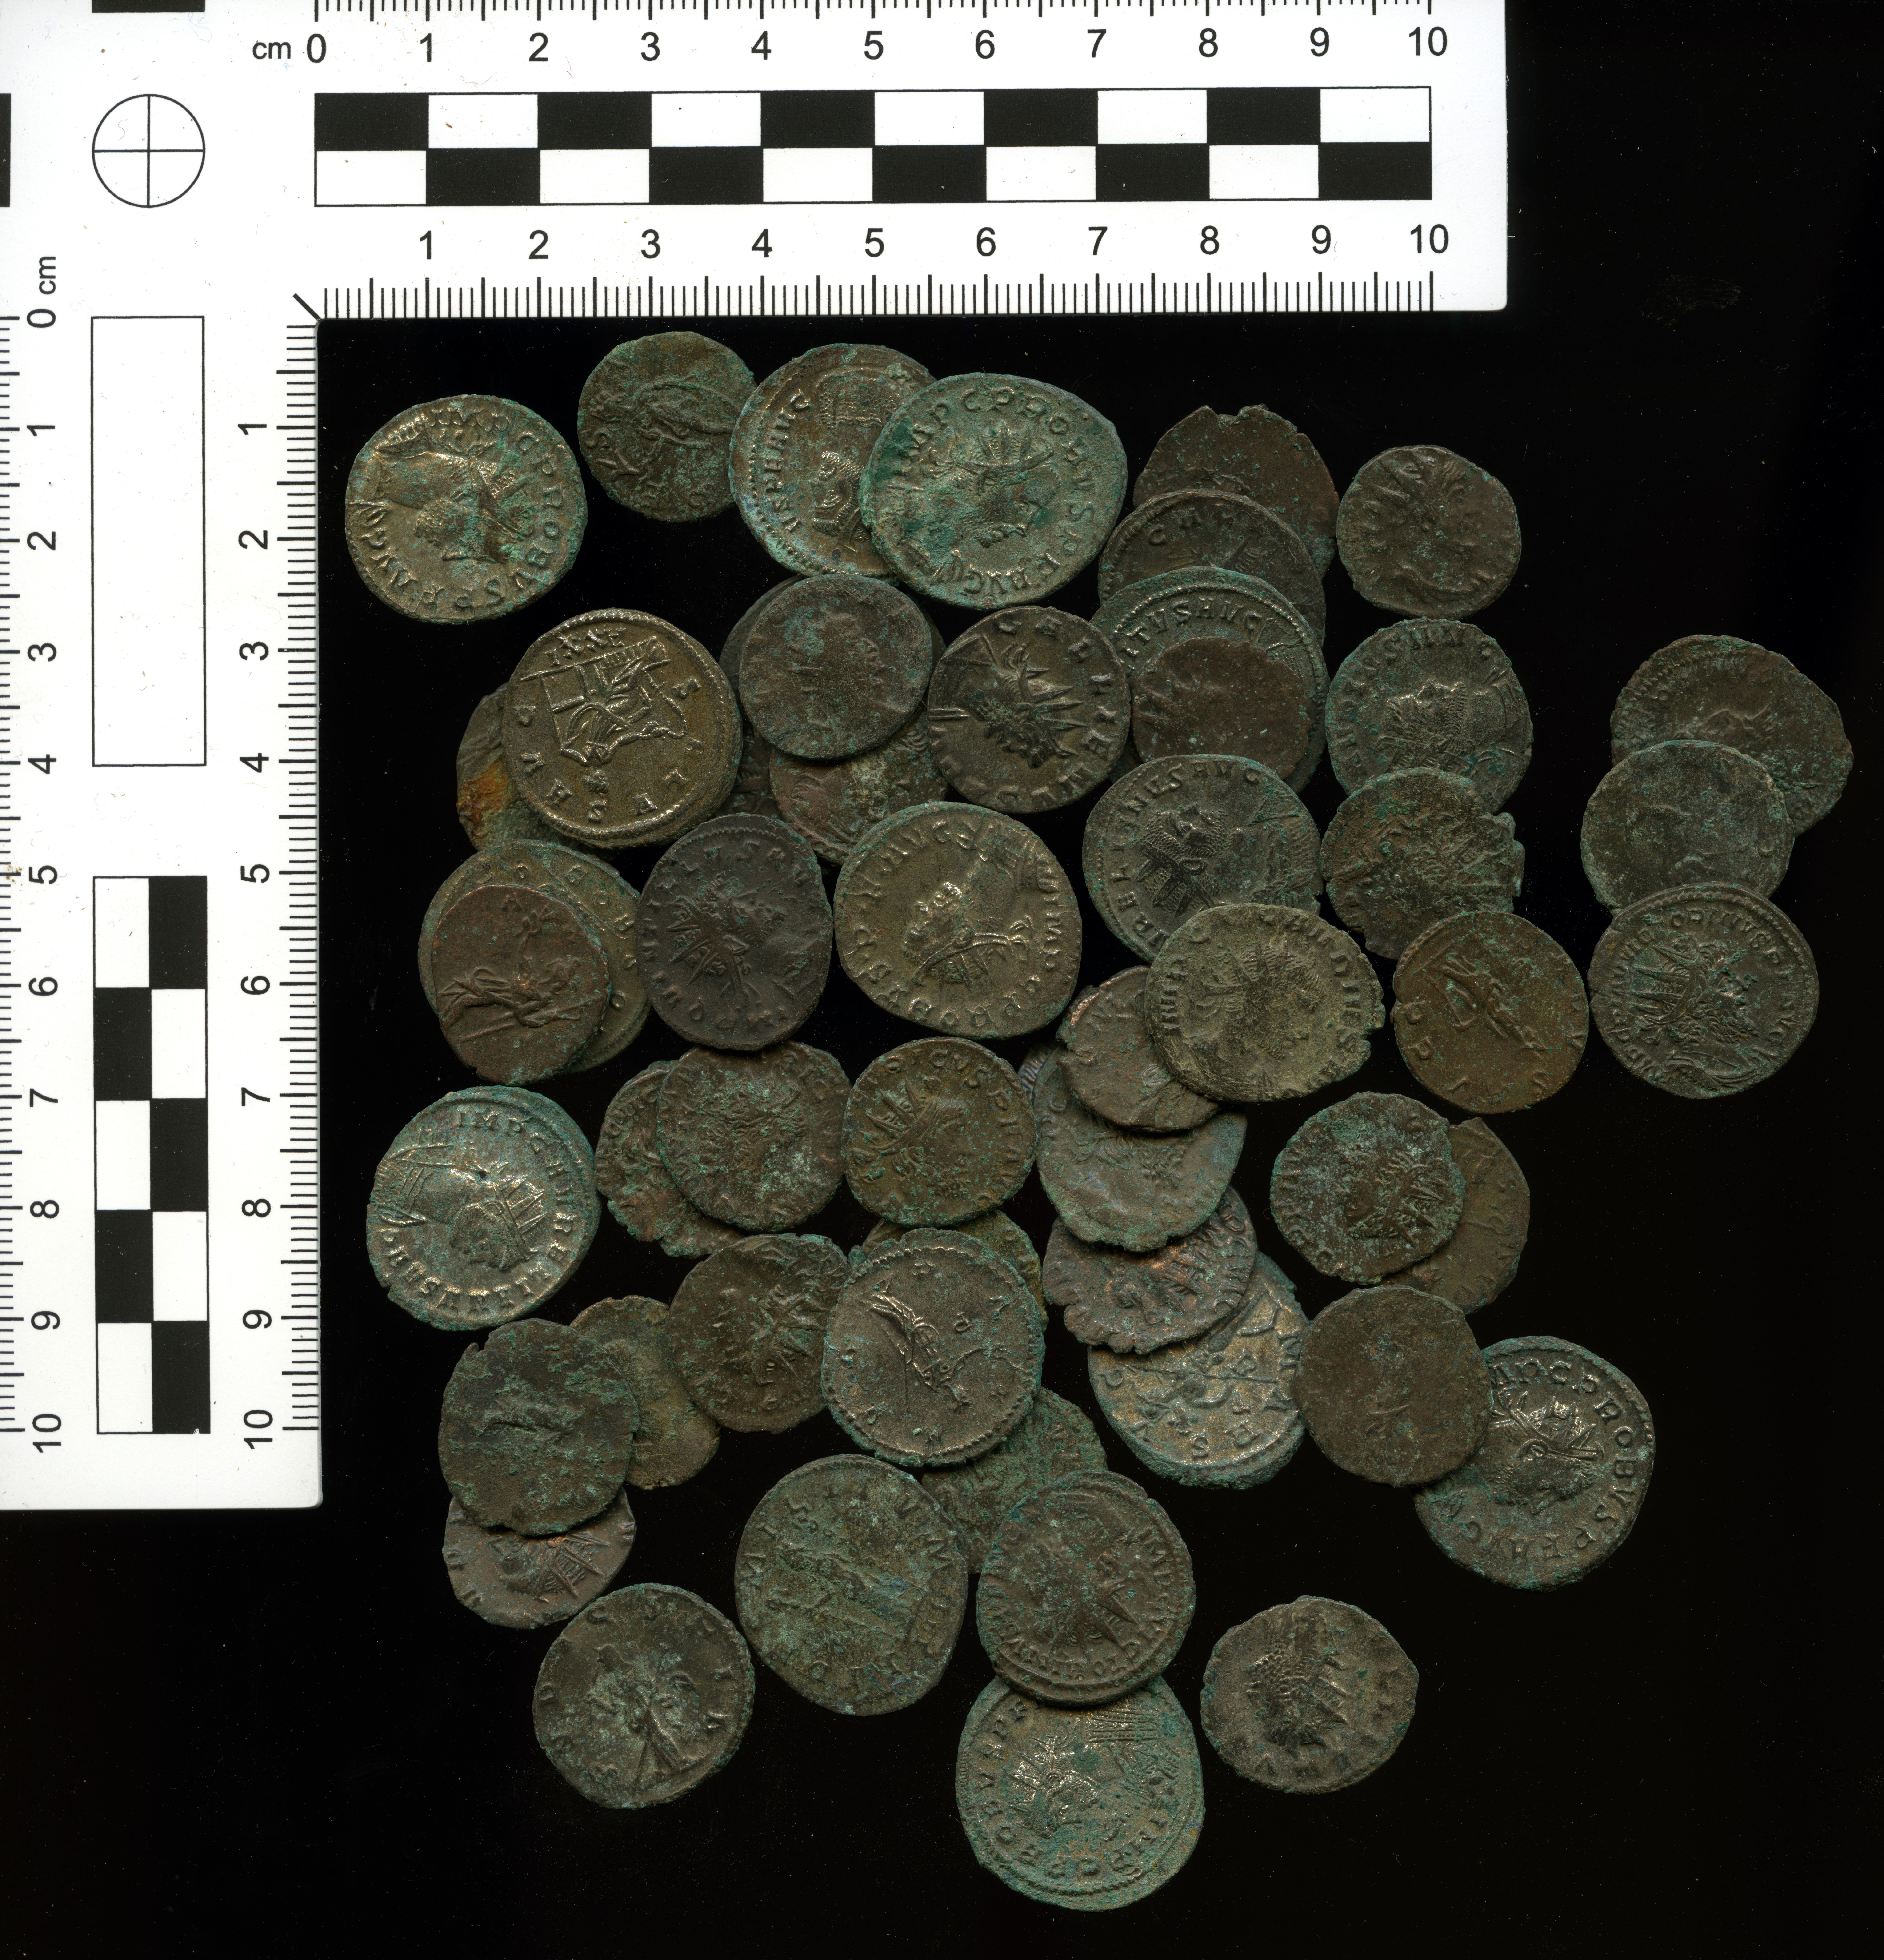 Piddletrenthide hoard coin sample (British Museum)